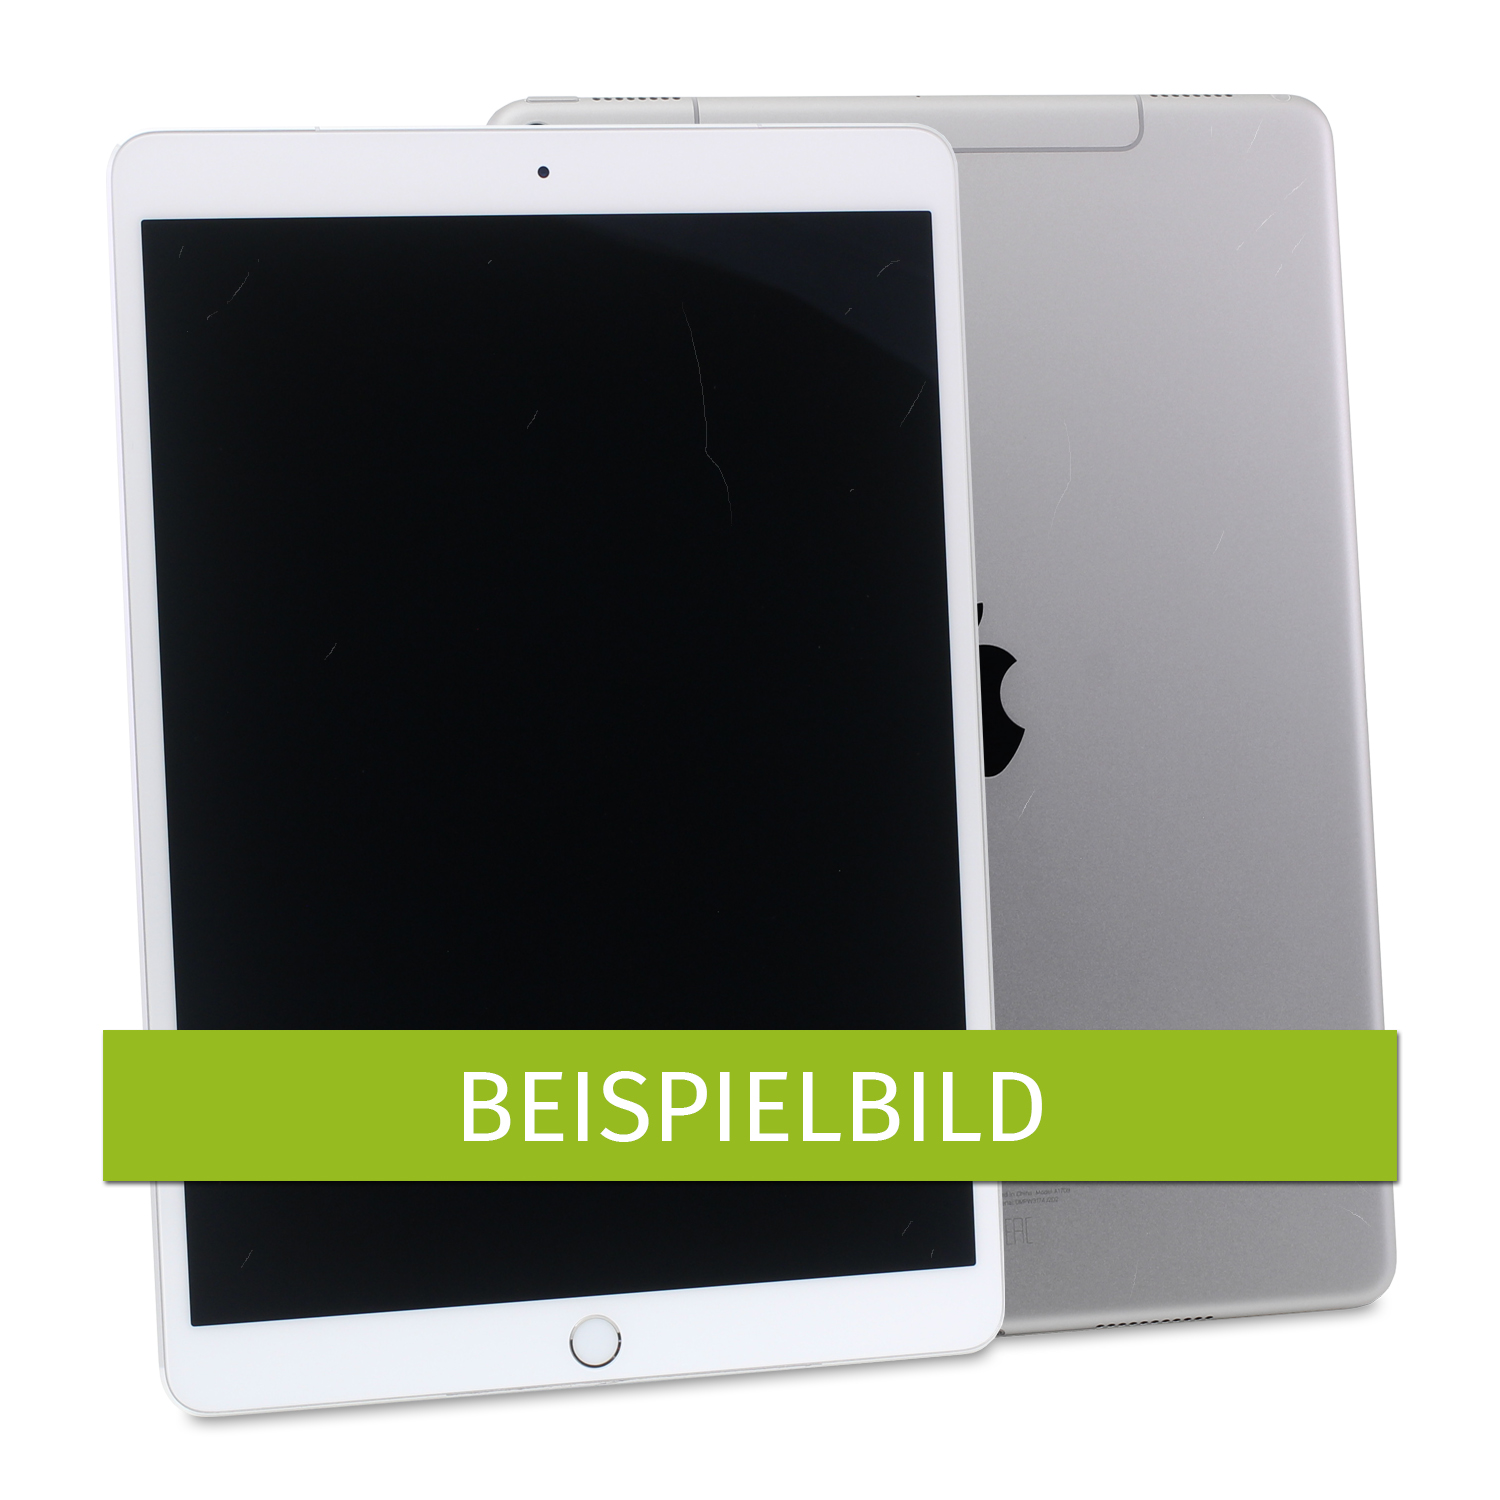 Apple, Inc. iPad Pro 10.5-inch Wi-Fi+Cellular 64GB Silver